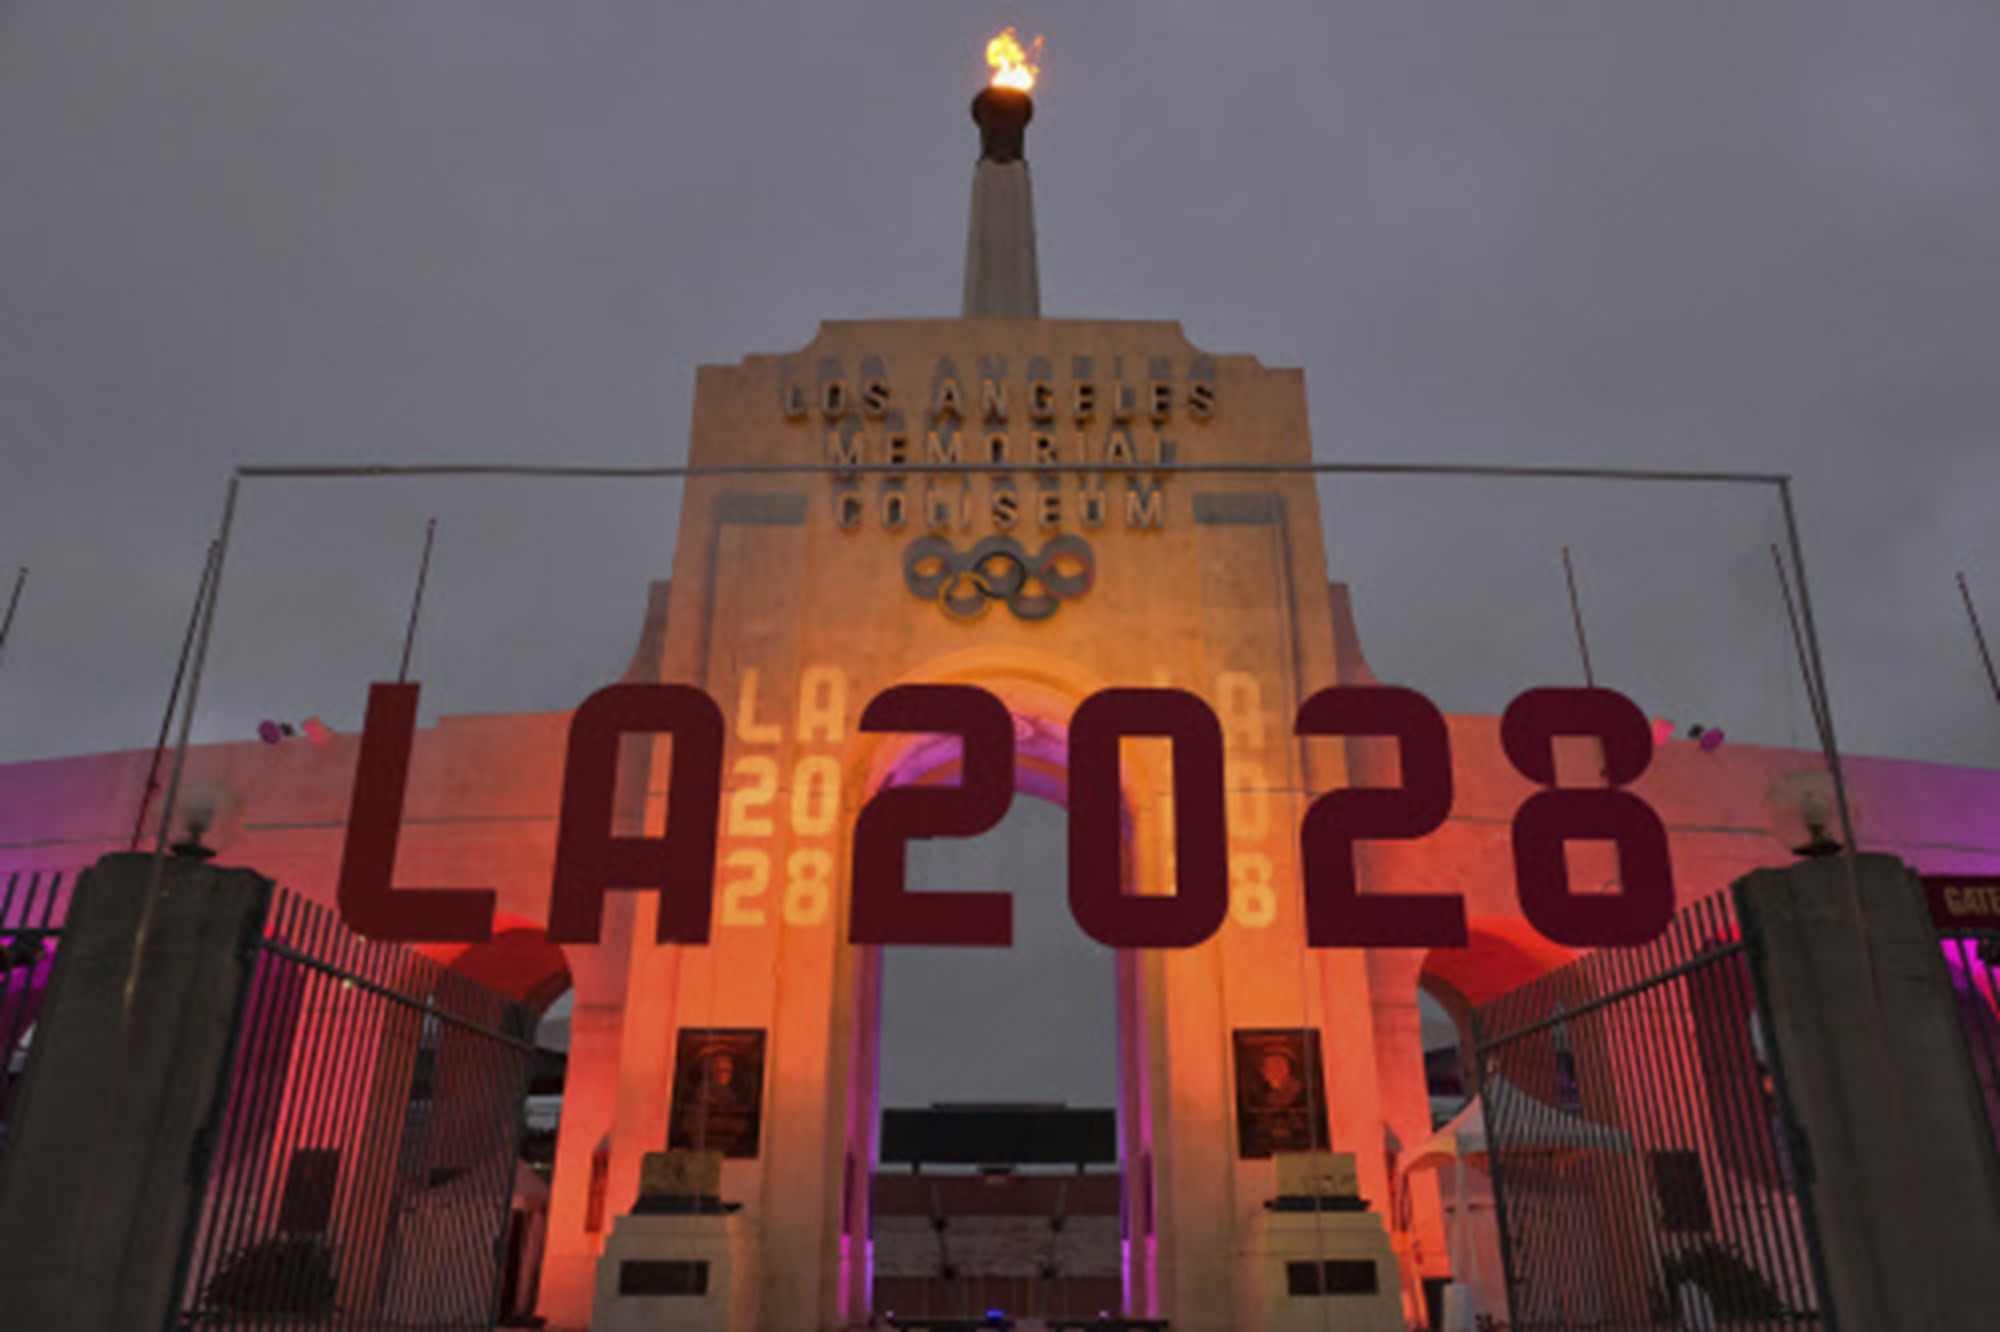 Olympische Sommerspiele 2024 in Paris, 2028 in Los Angeles ...